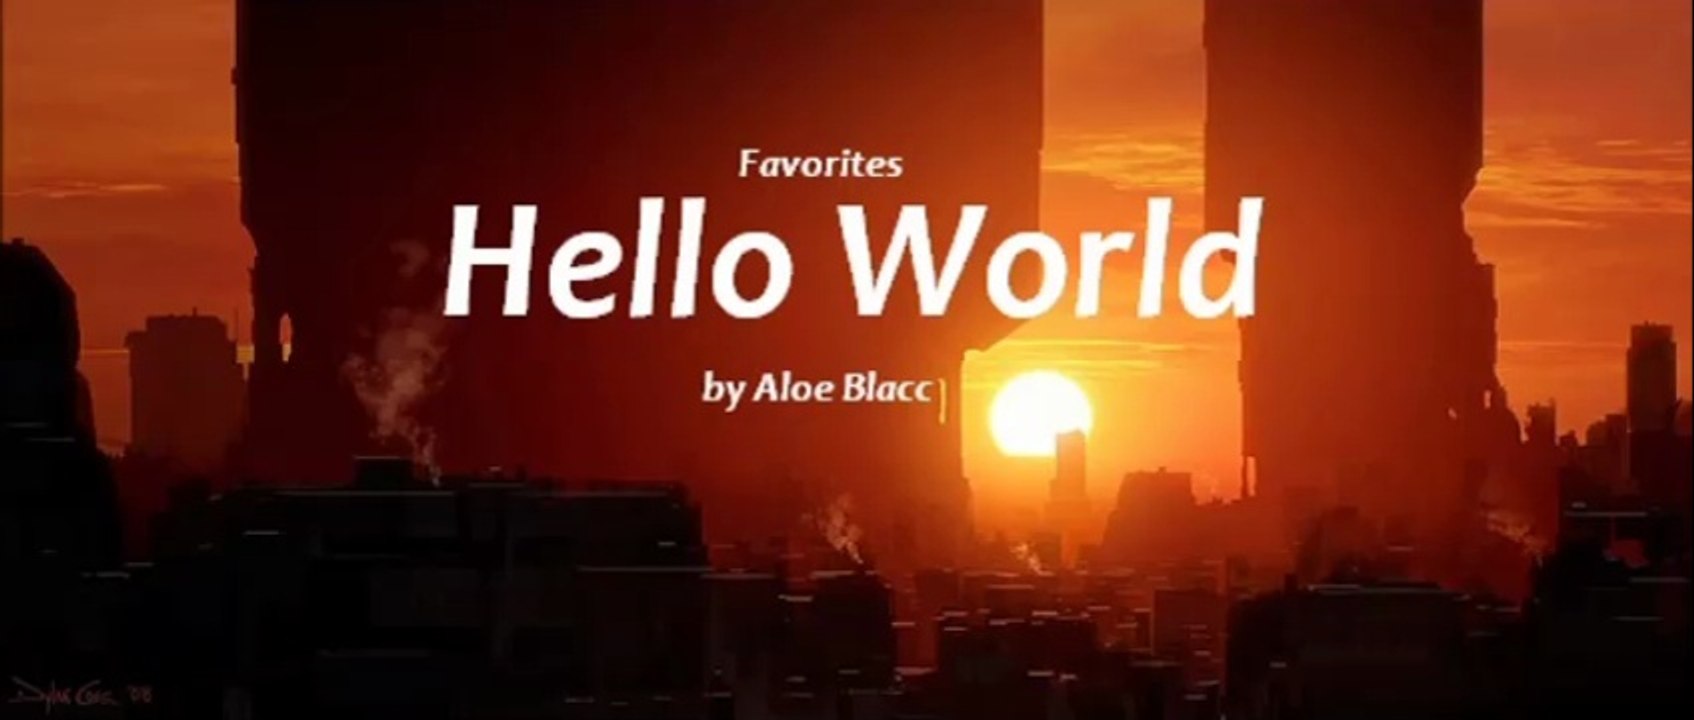 Hello World by Aloe Blacc